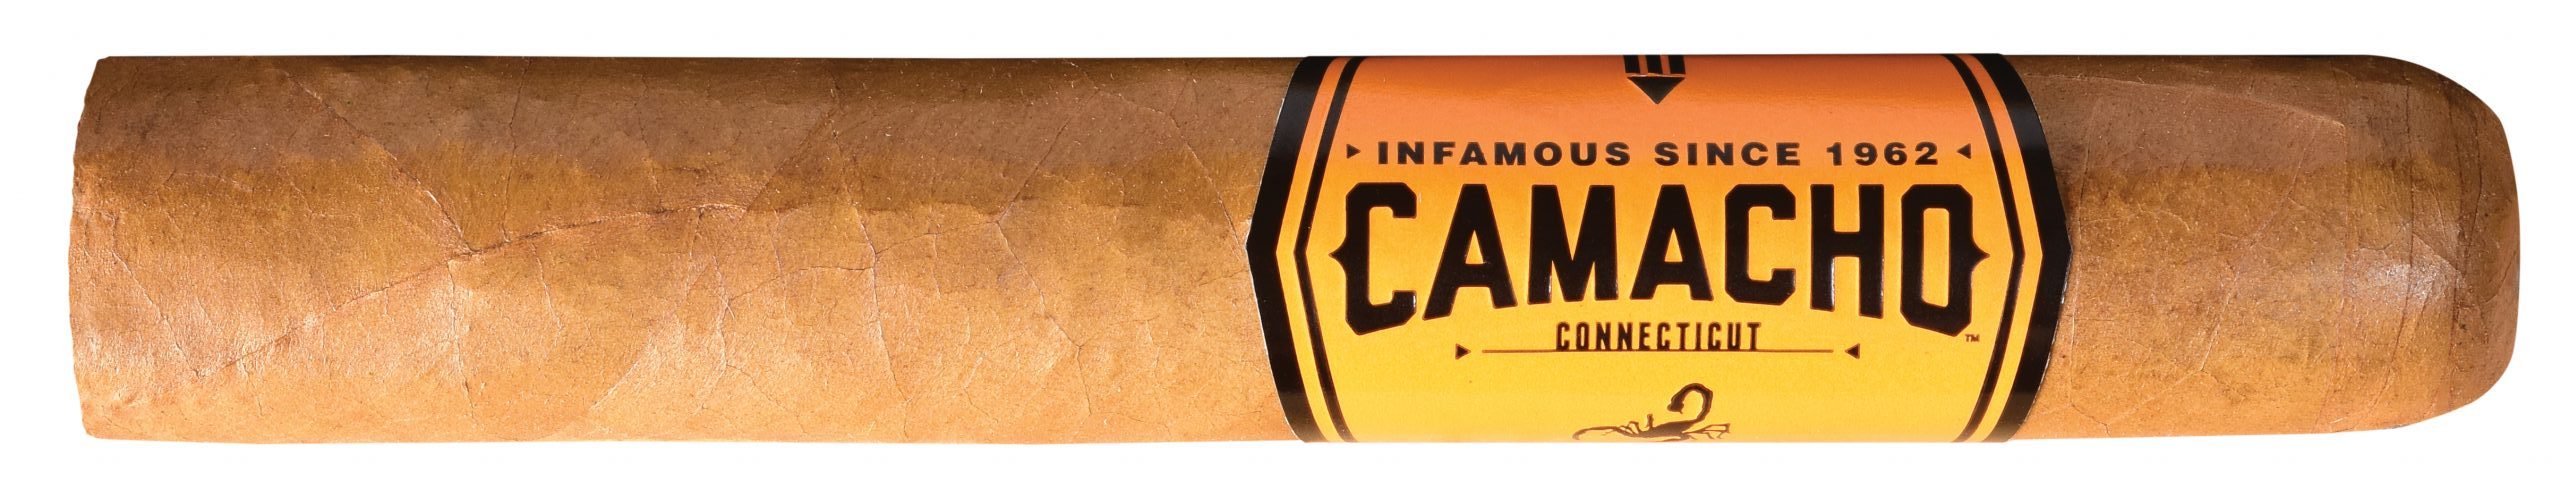 camacho connecticut 60x6 single cigar